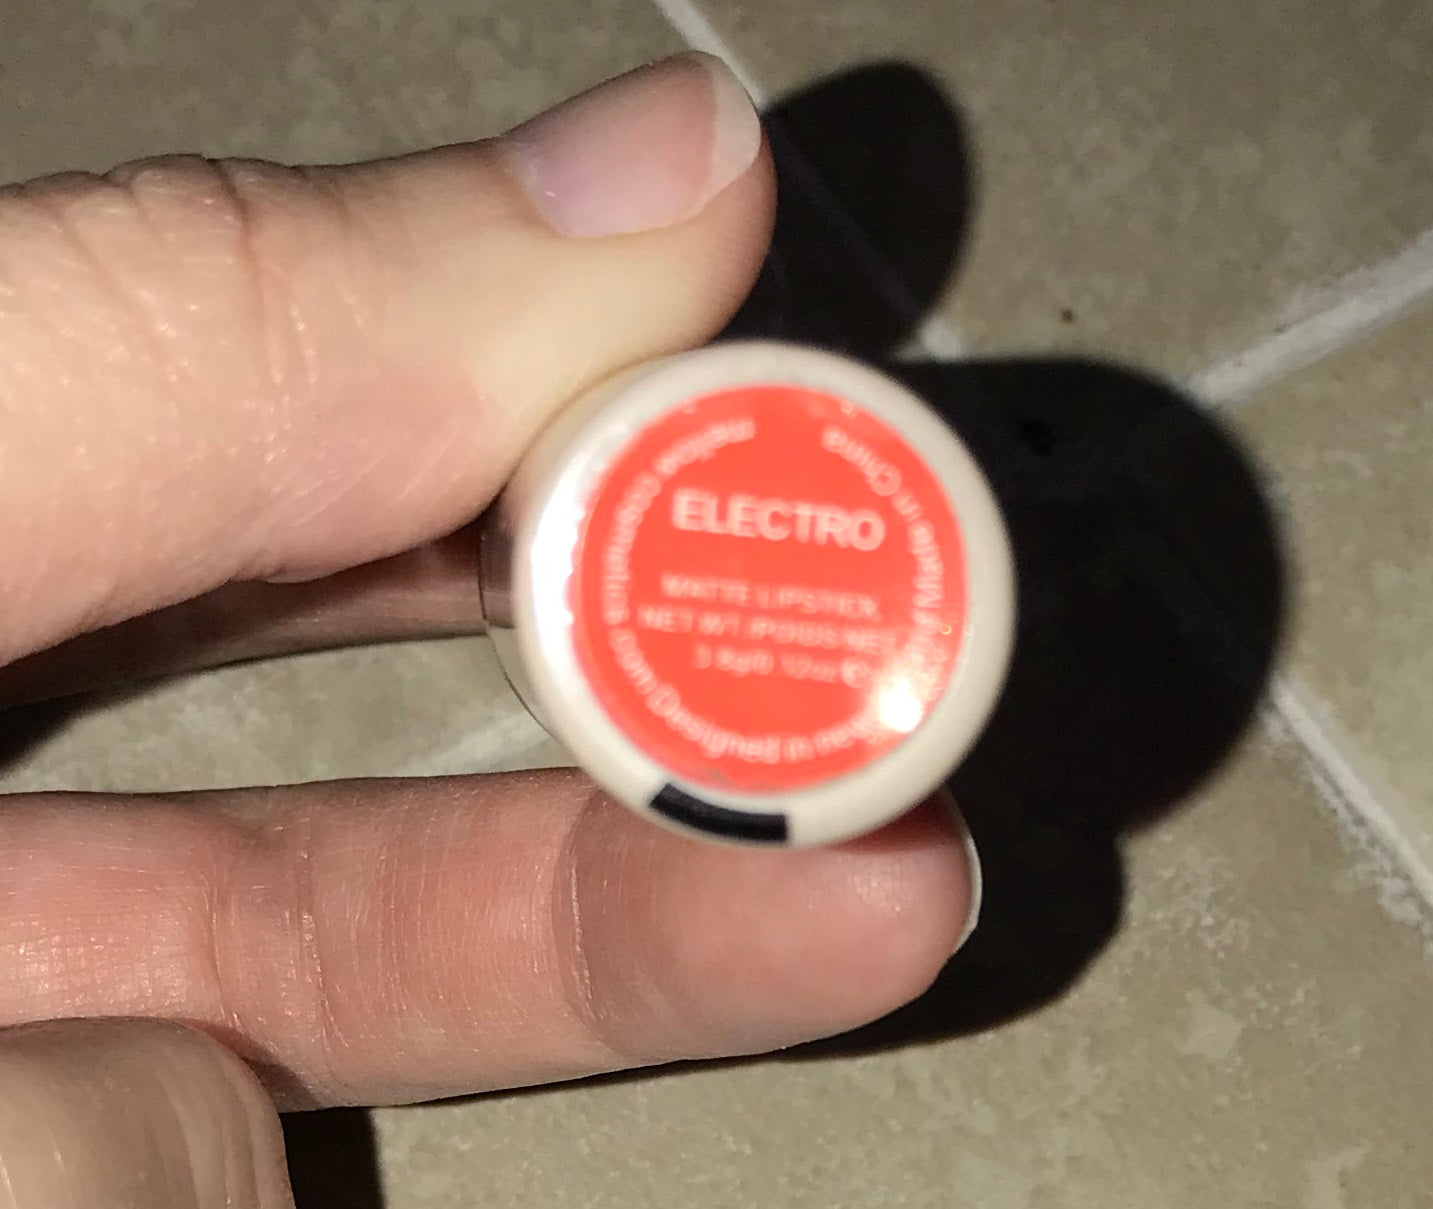 Mellow Creamy Matte Lipstick in Electro